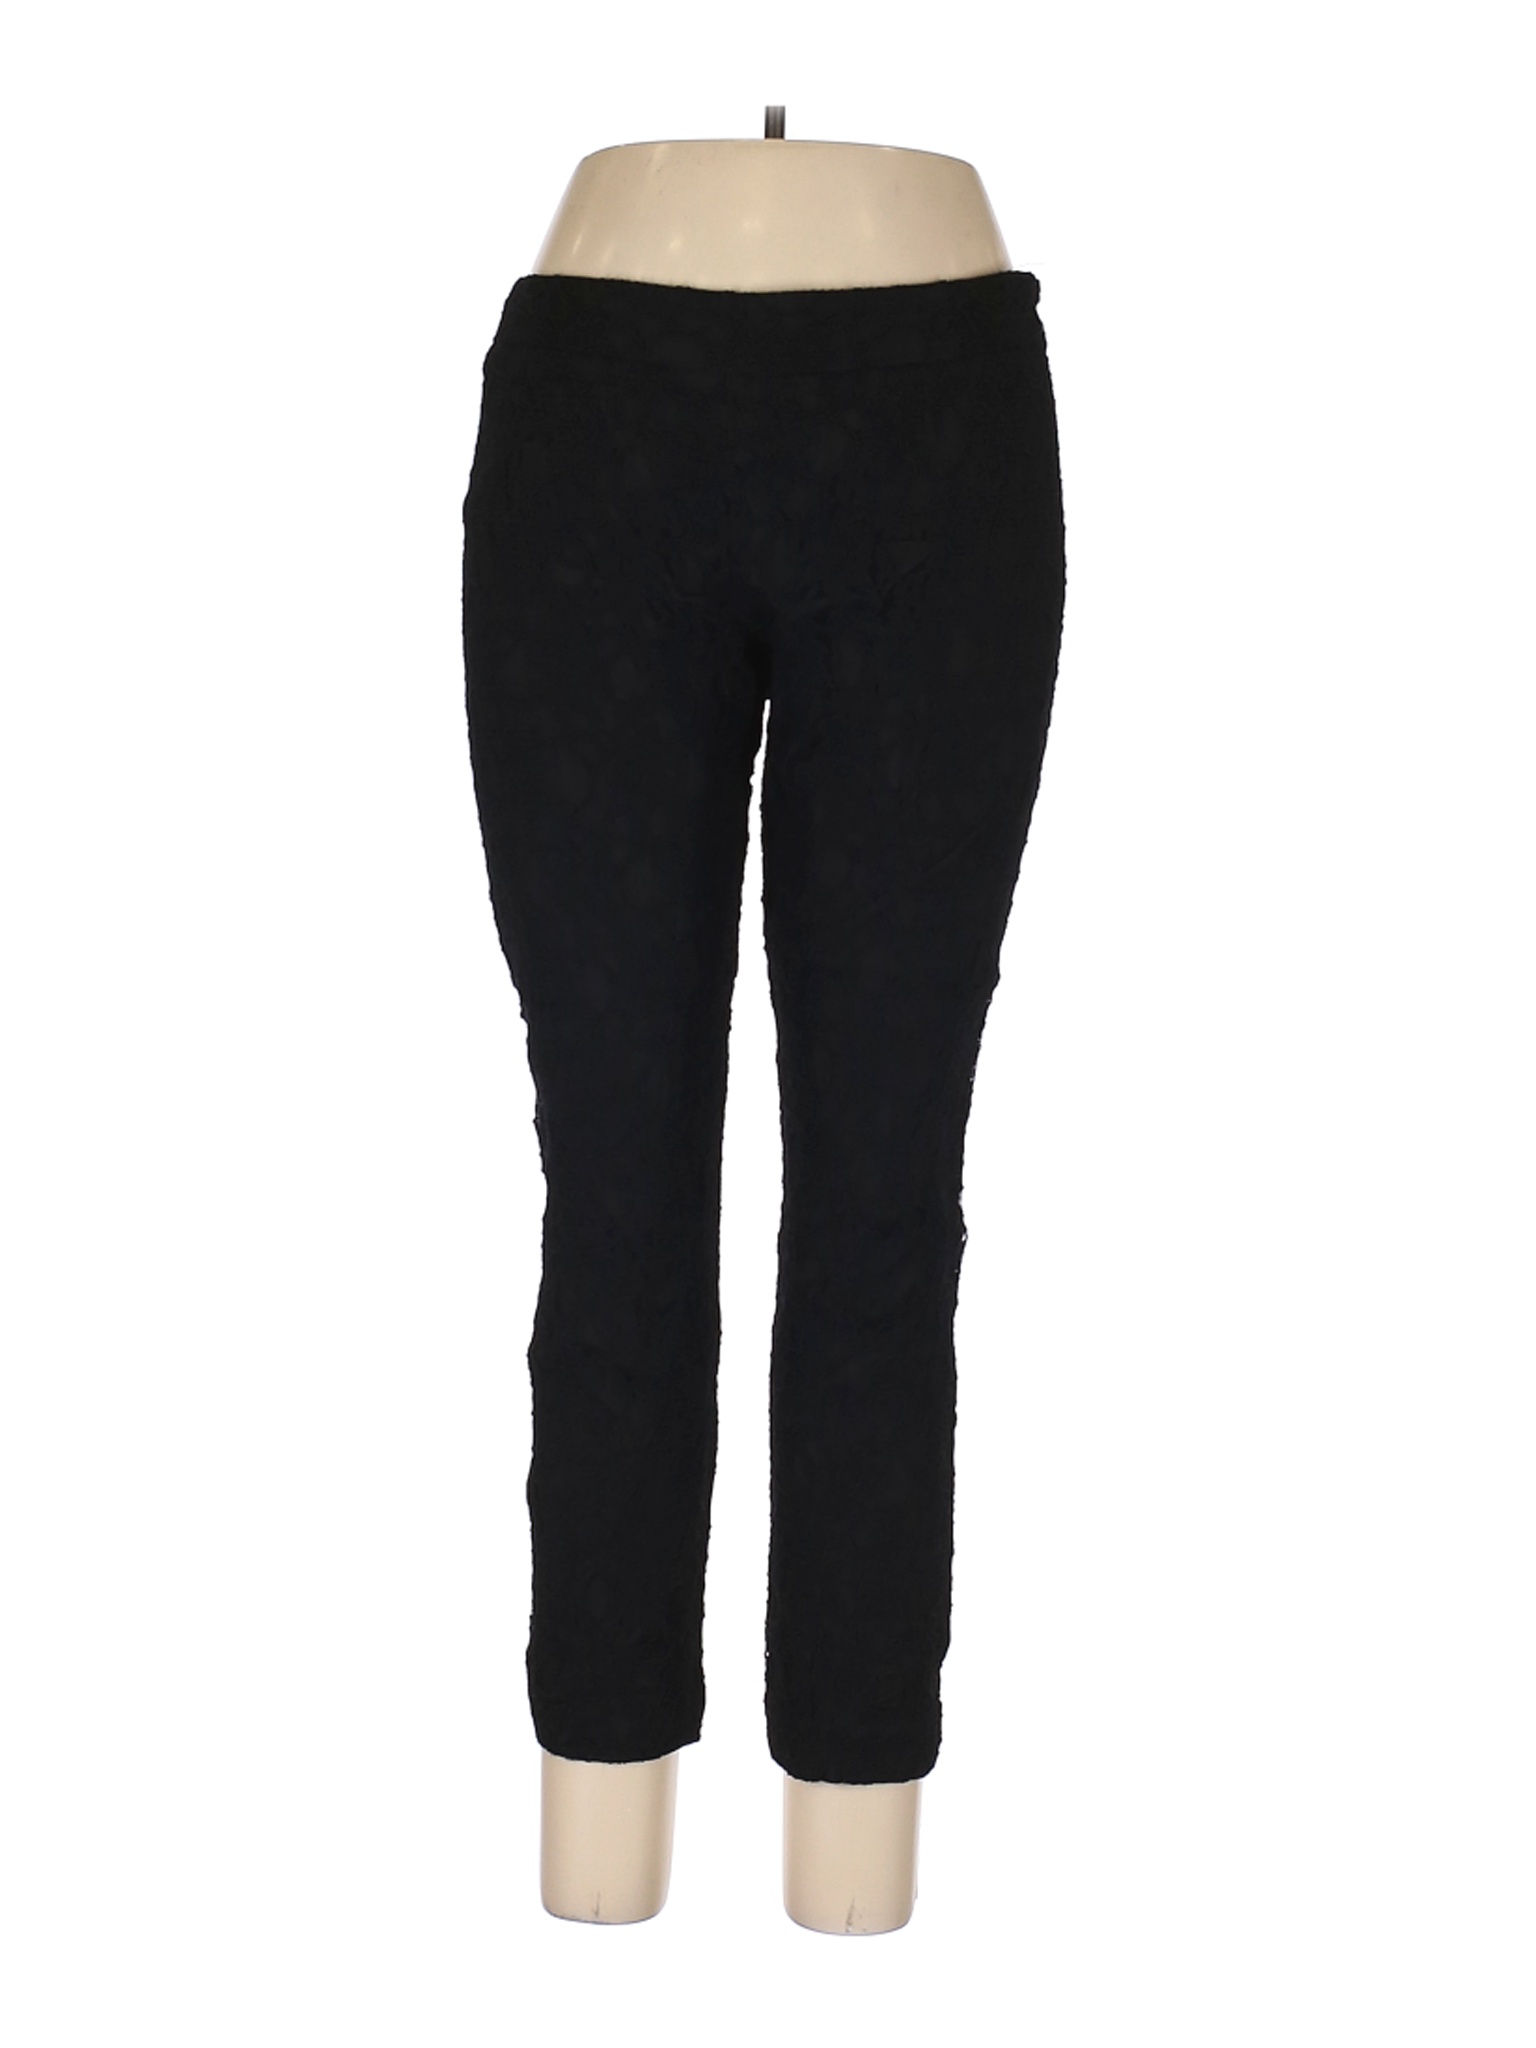 Express Women Black Casual Pants 10 | eBay